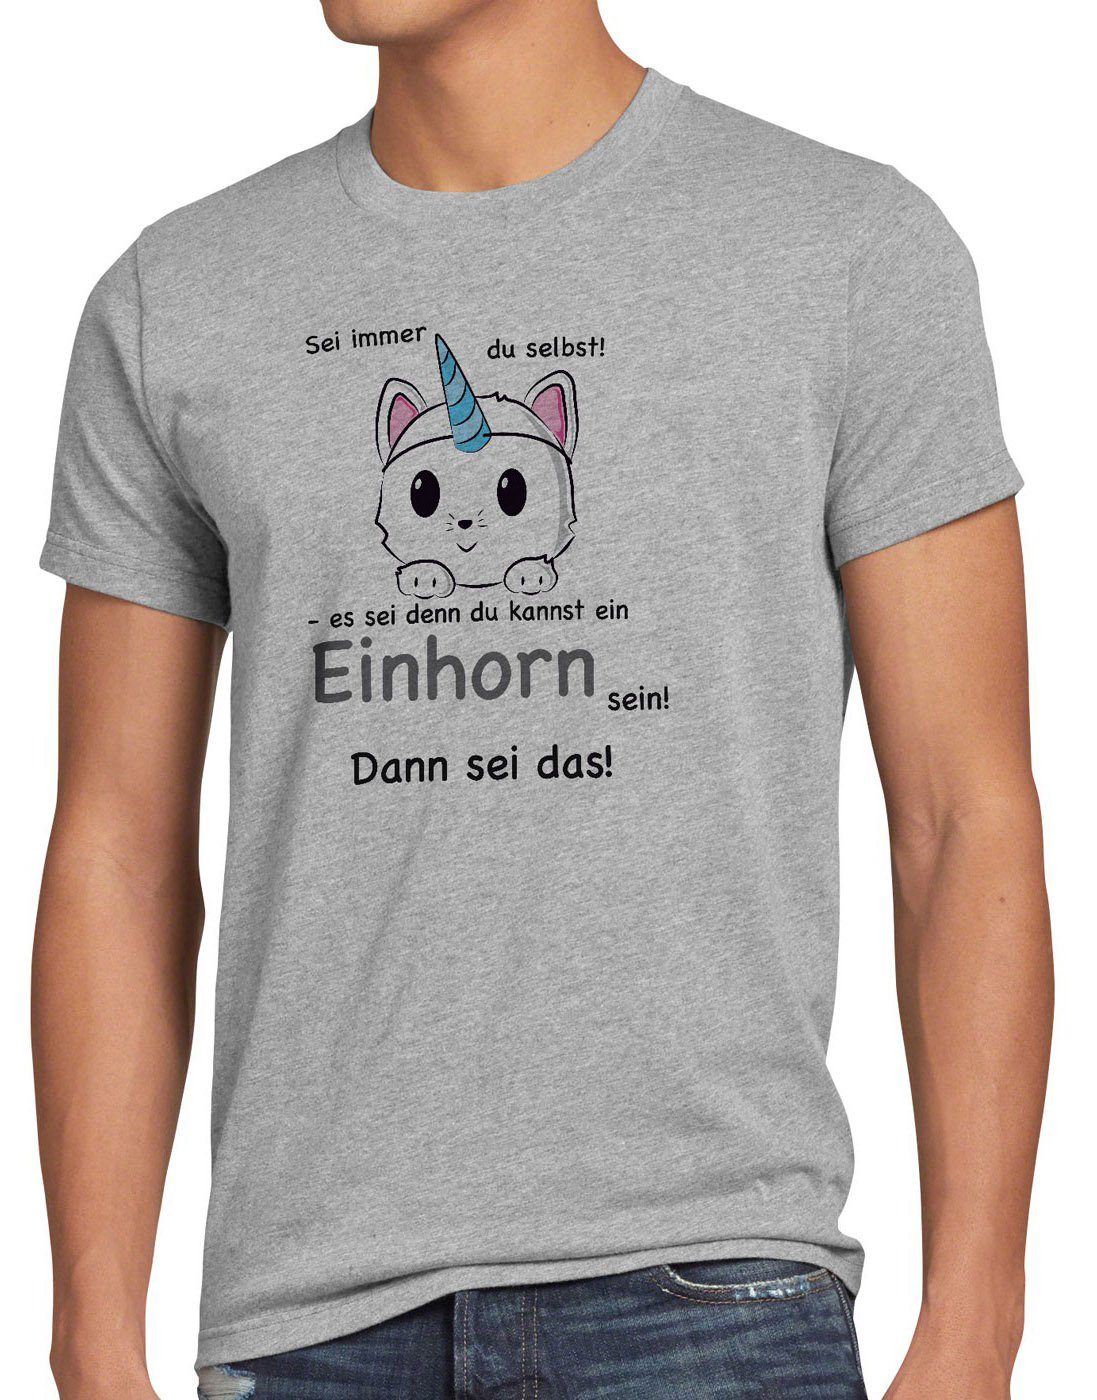 Unicorn Einhorn meliert Sei sei style3 Fun Herren Katze grau Print-Shirt selbst! es denn T-Shirt immer du Spruch